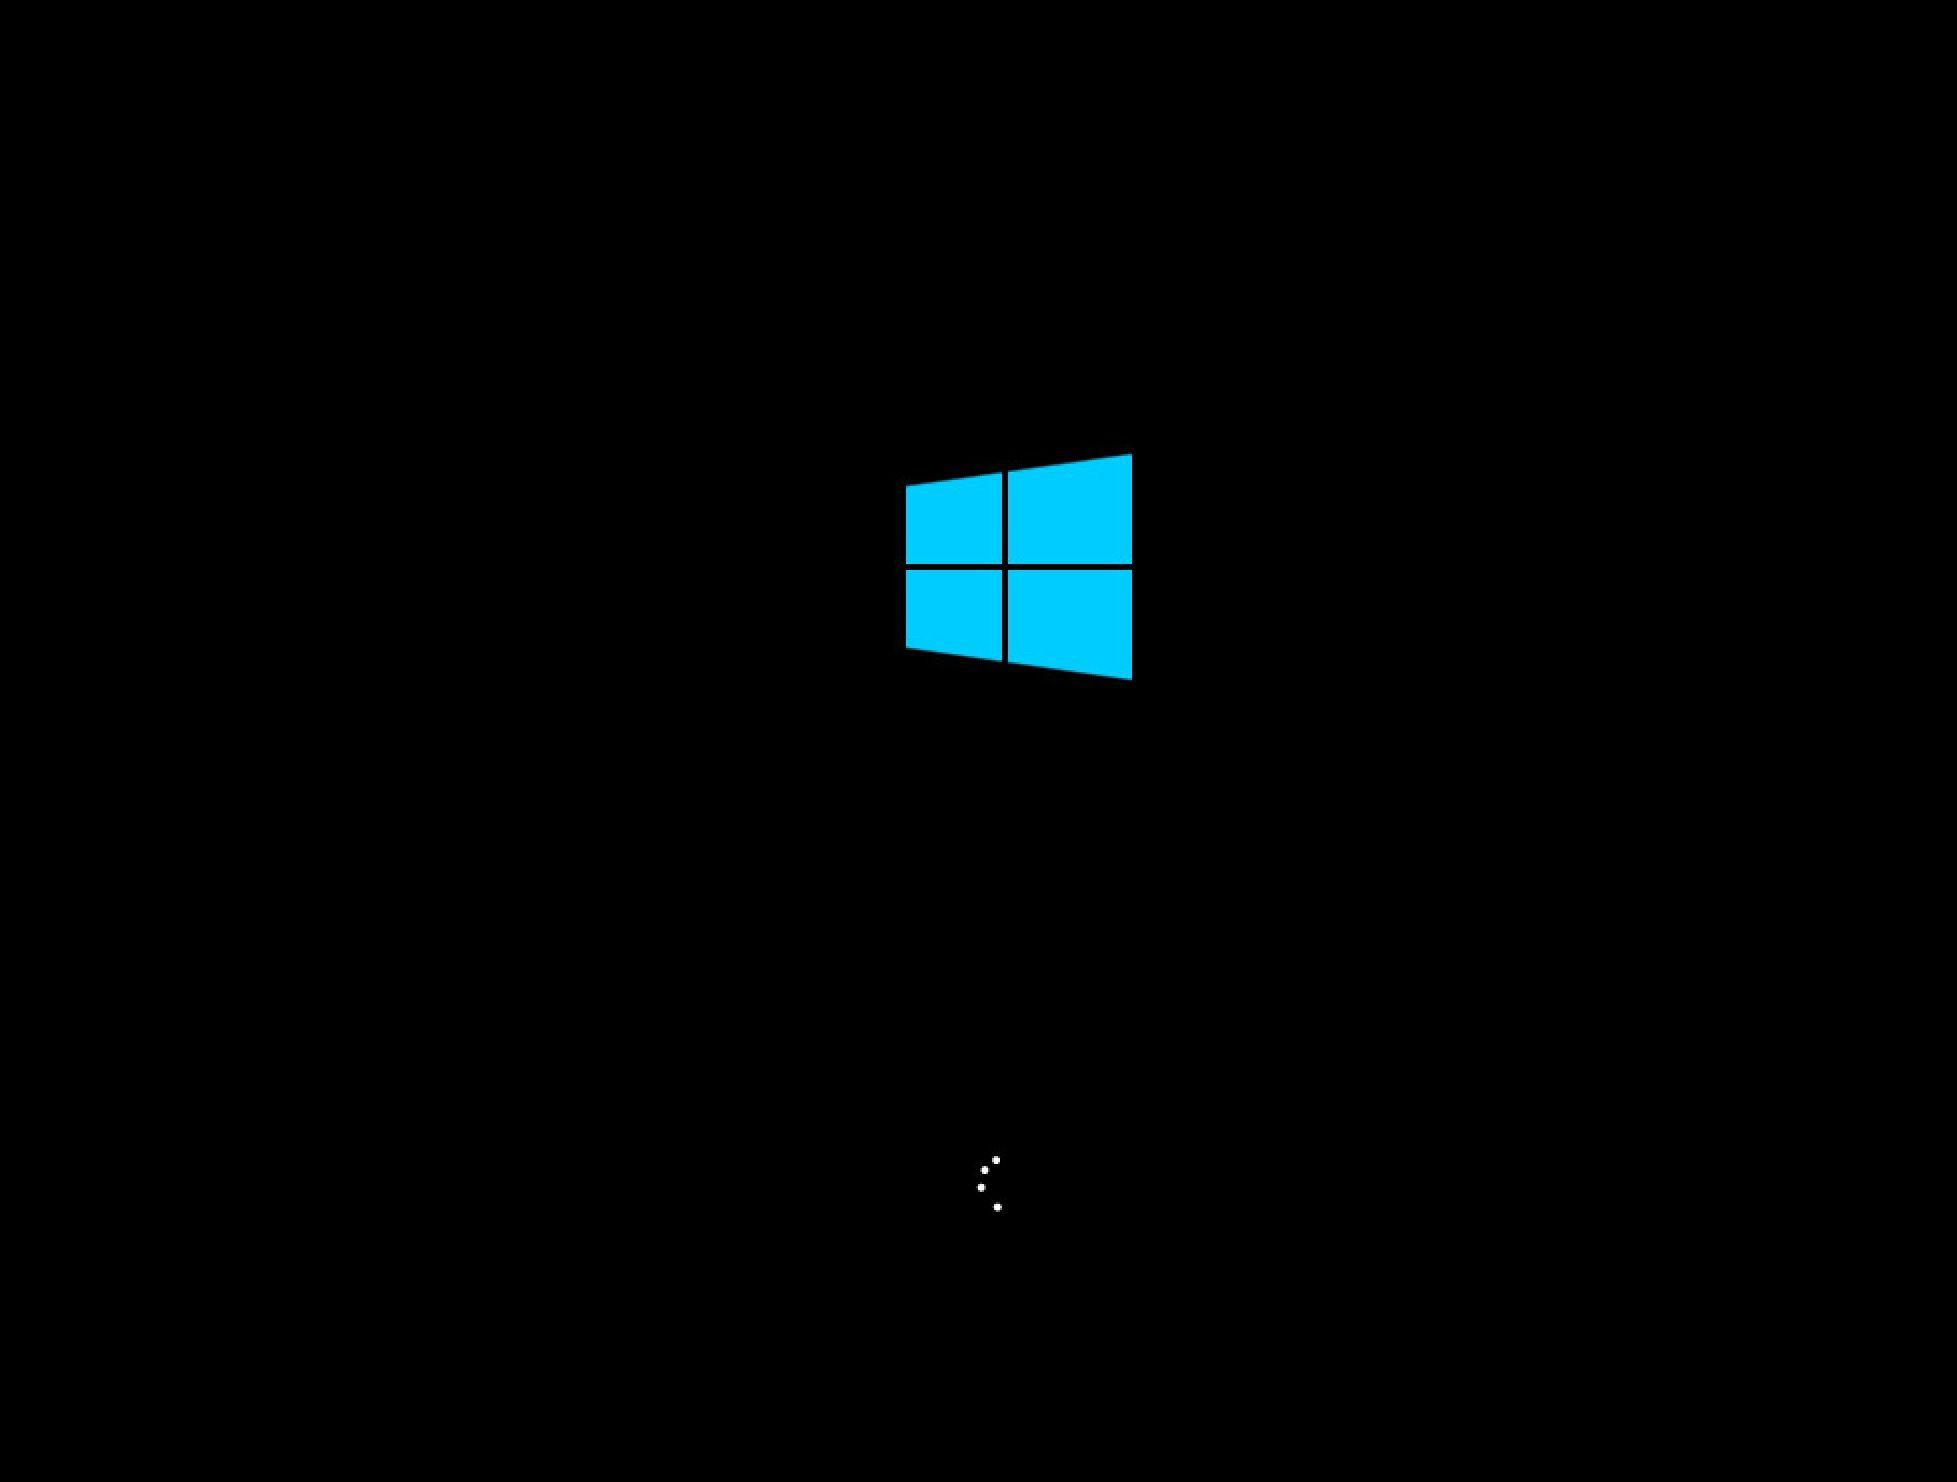 Windows 2012 Logo - Windows 2012 R2 Server Stuck While Rebooting at Spinning Green